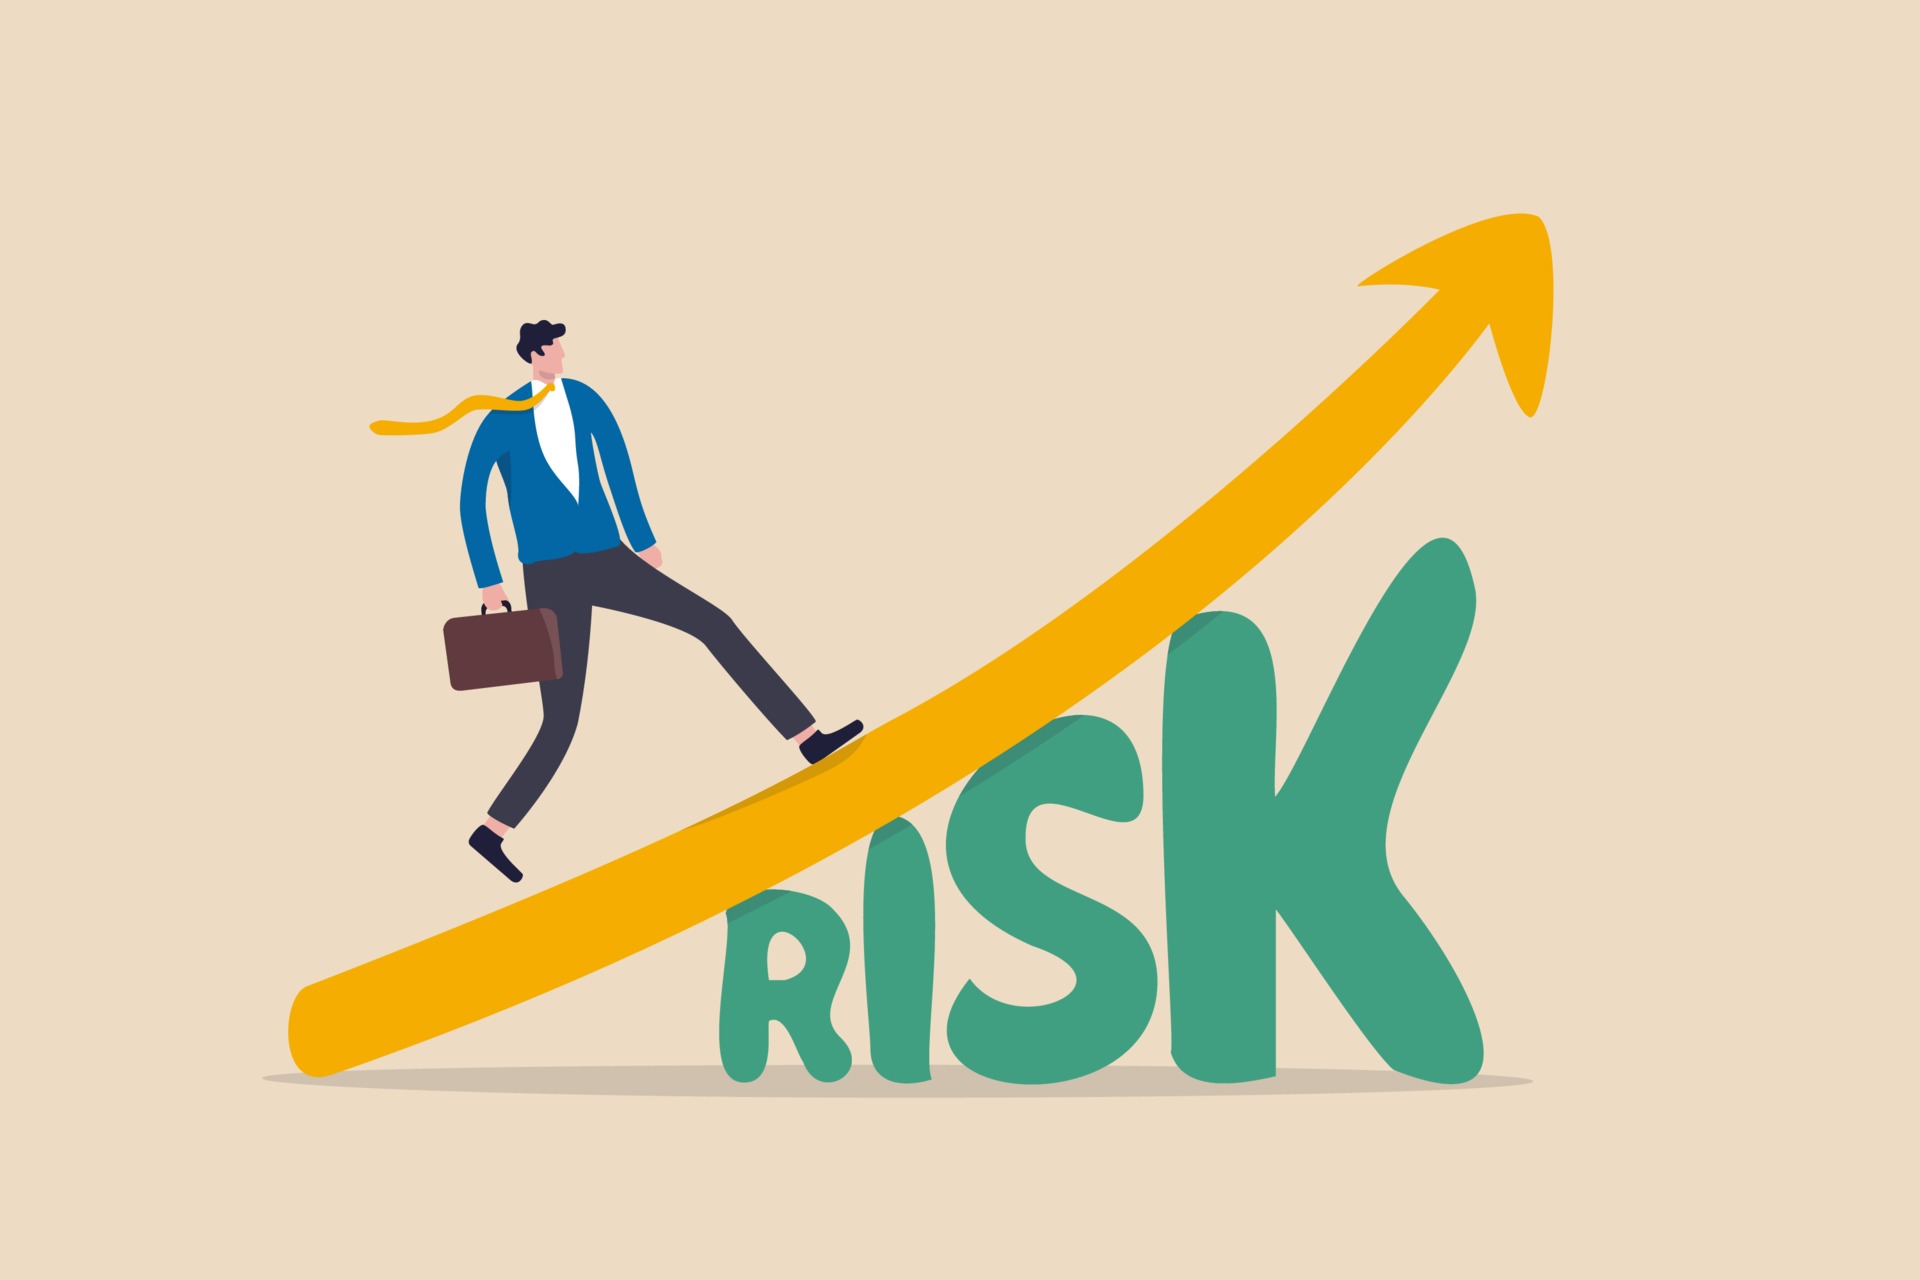 High risk high return stock market investment, trade off of risky